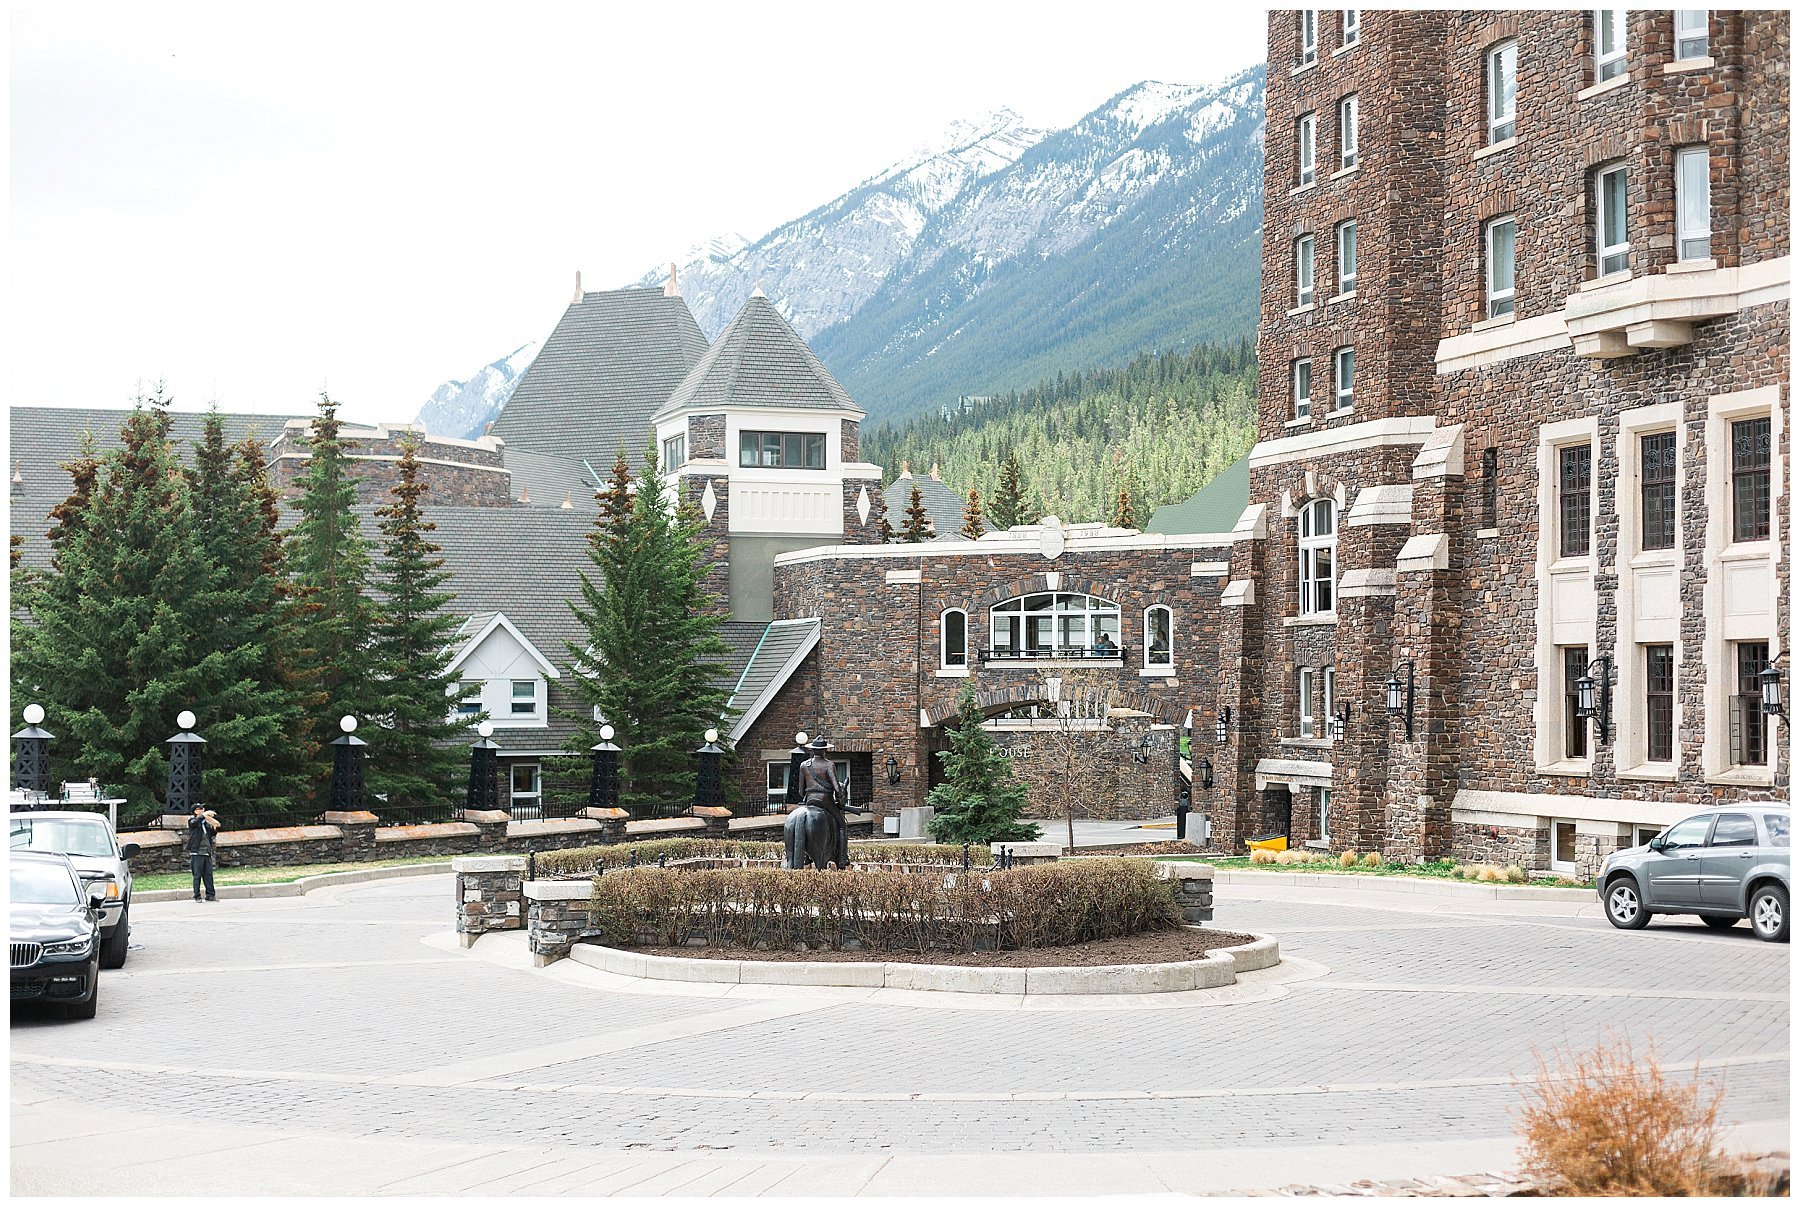 Fairmont Banff springs hotel